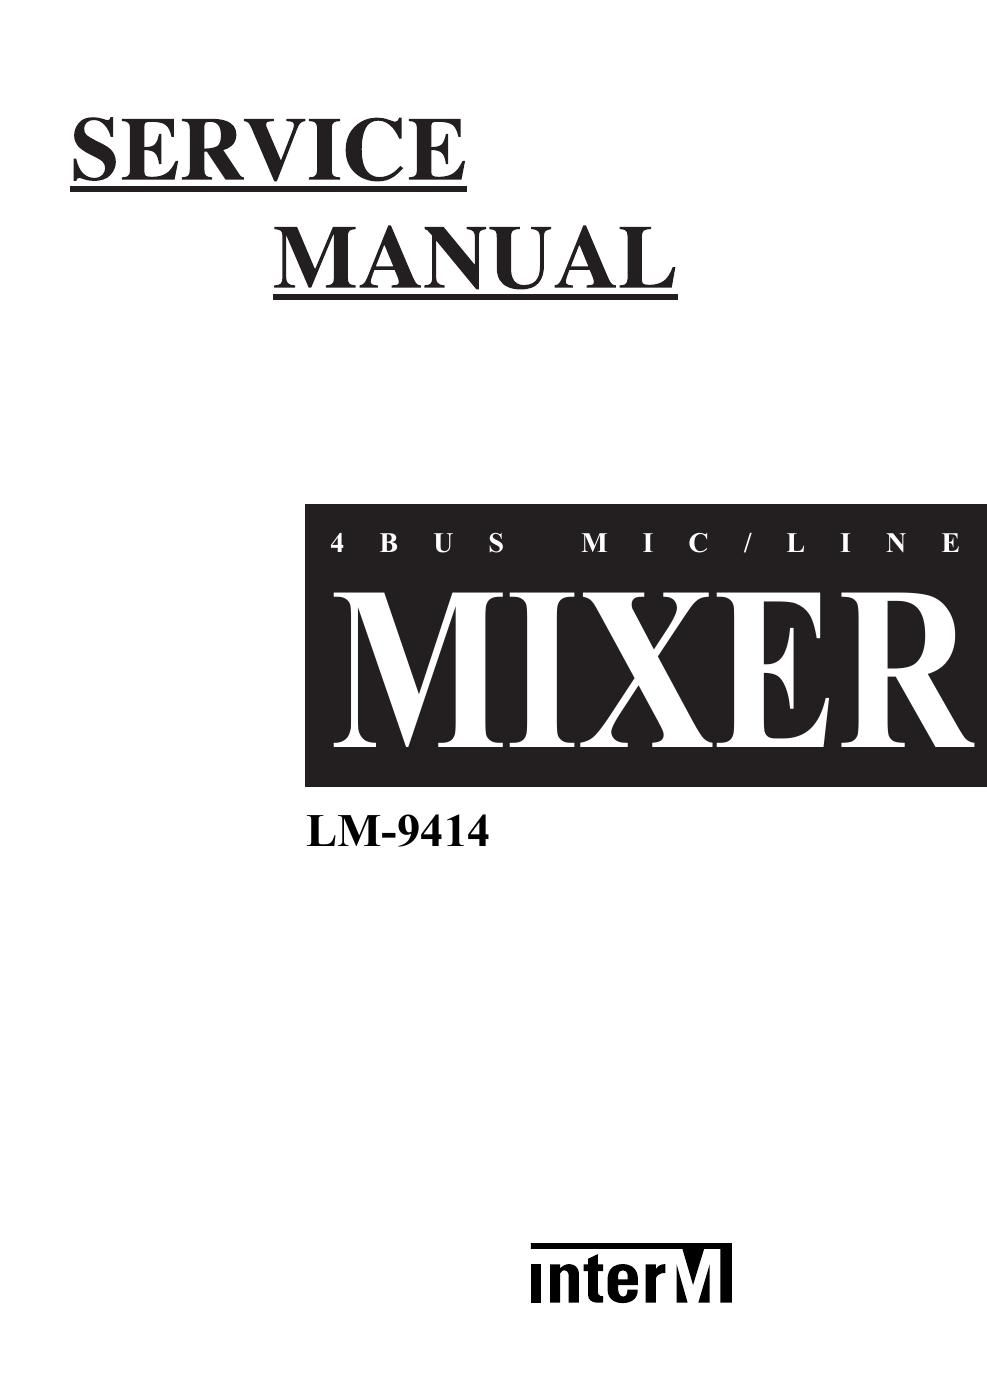 interm lm 9414 line mixer